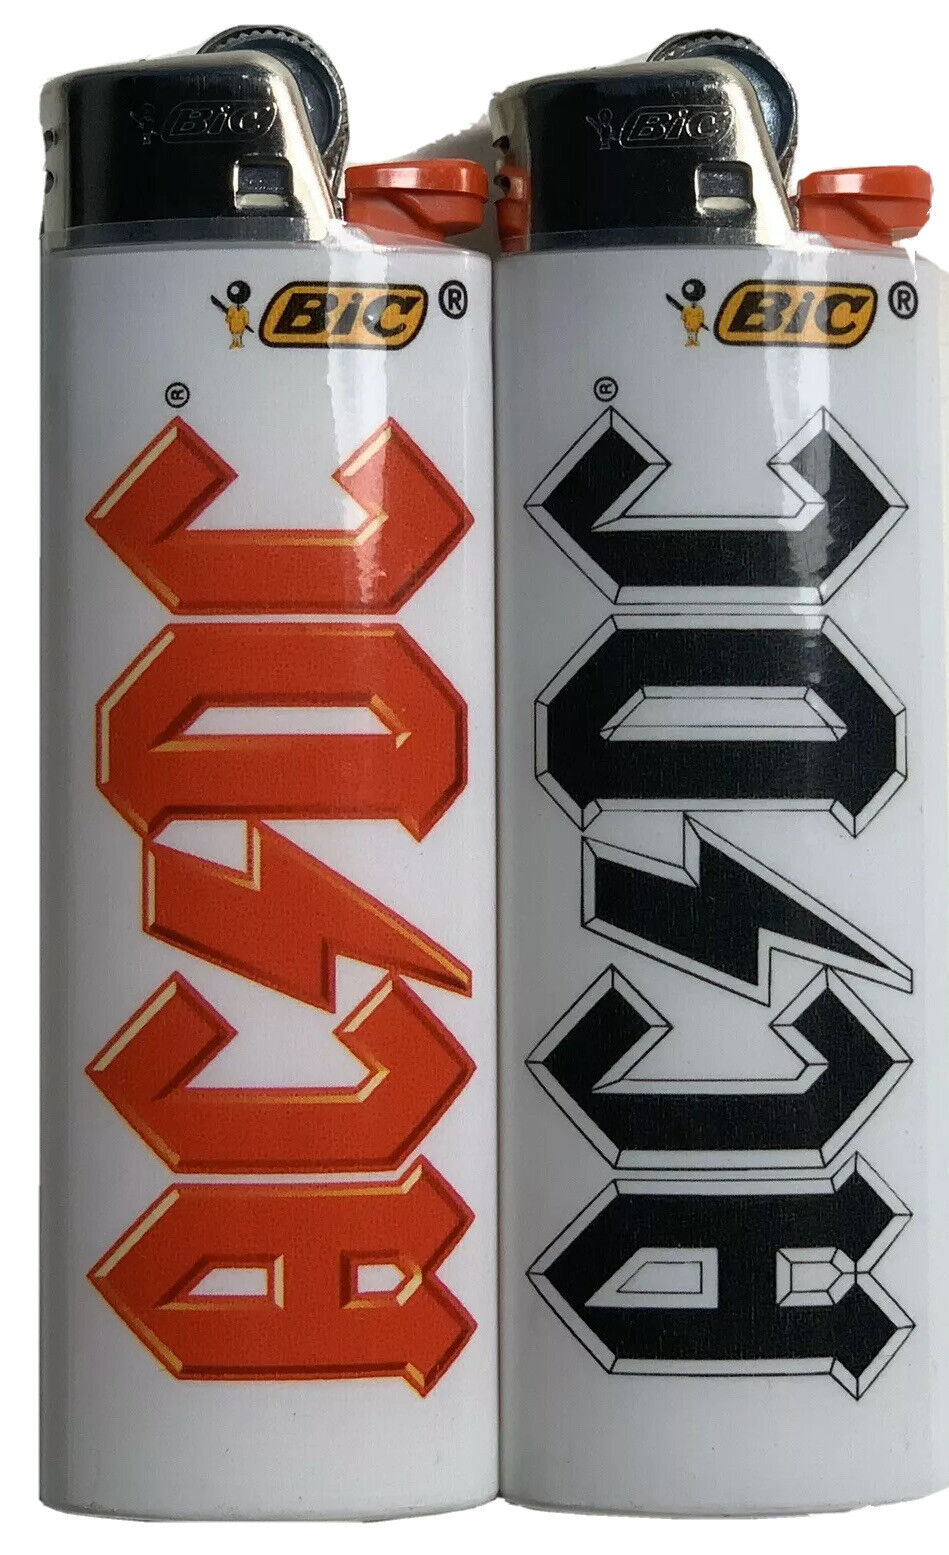 2 AC DC Rock Band Bic Lighters ( REGULAR SIZE AC/DC )